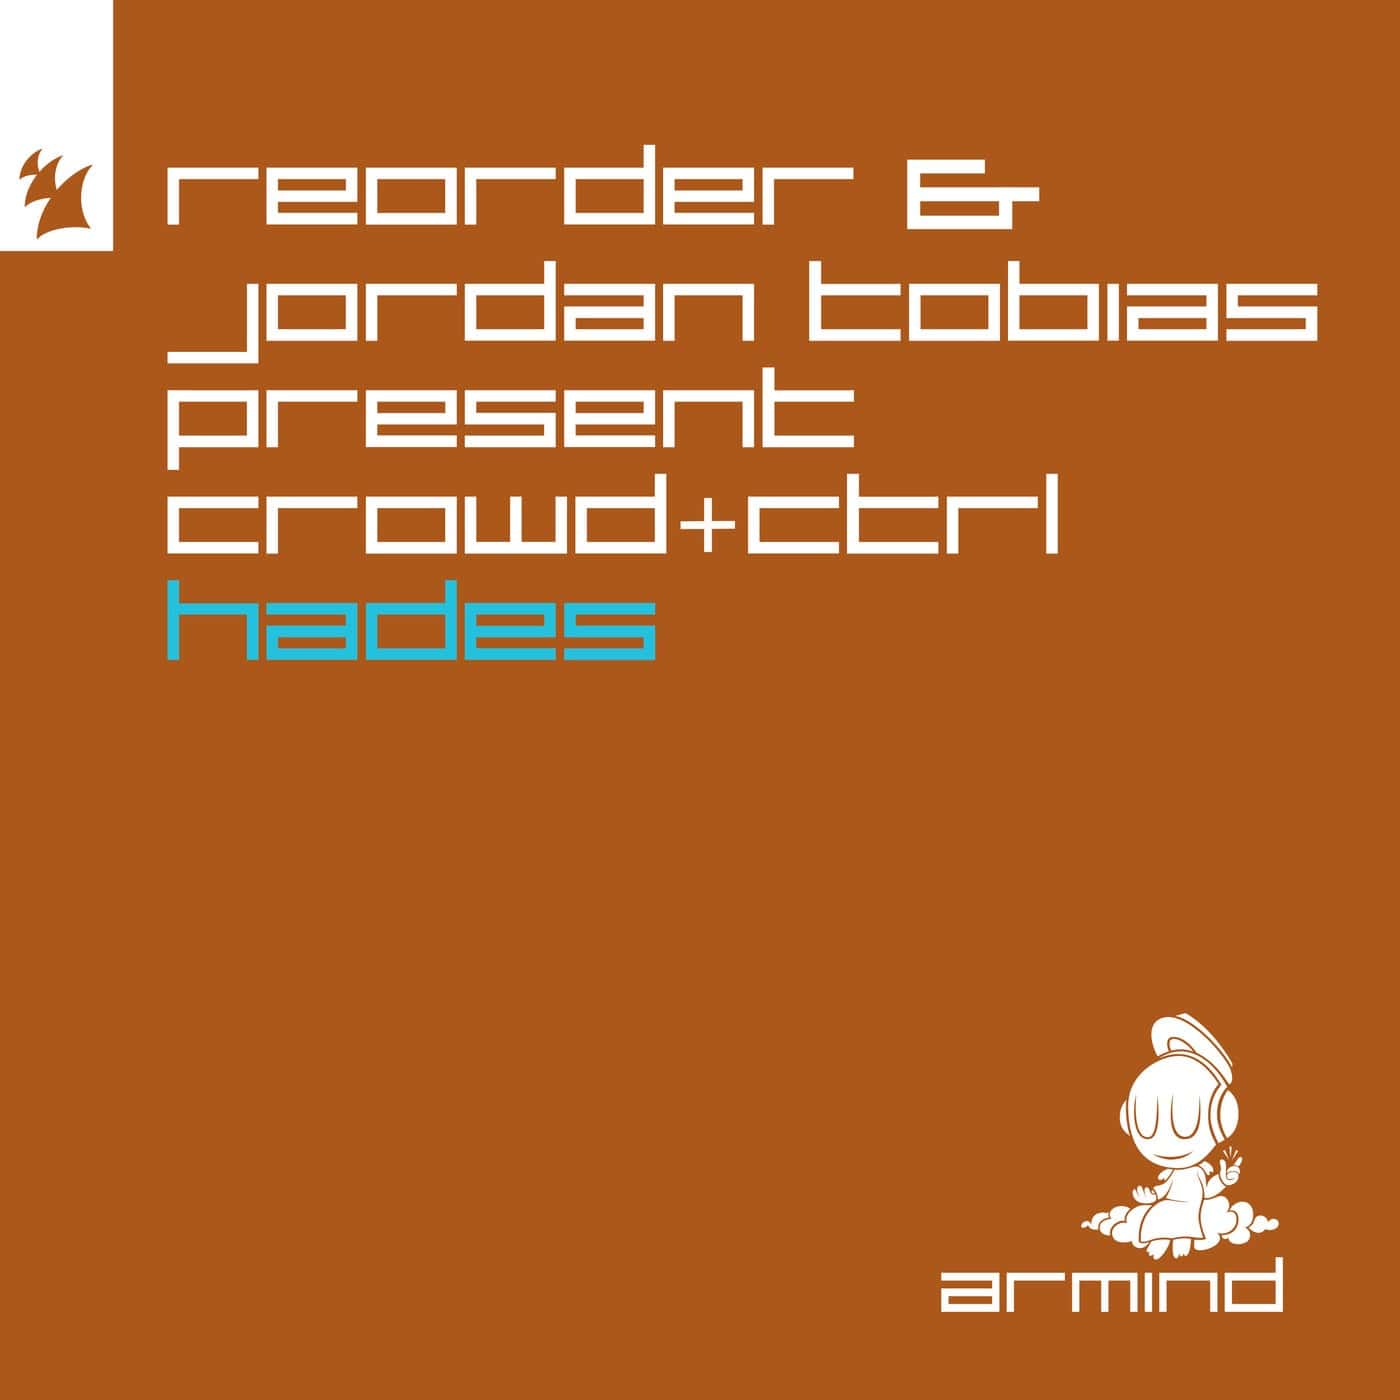 Download ReOrder, Jordan Tobias, Crowd+Ctrl - Hades on Electrobuzz